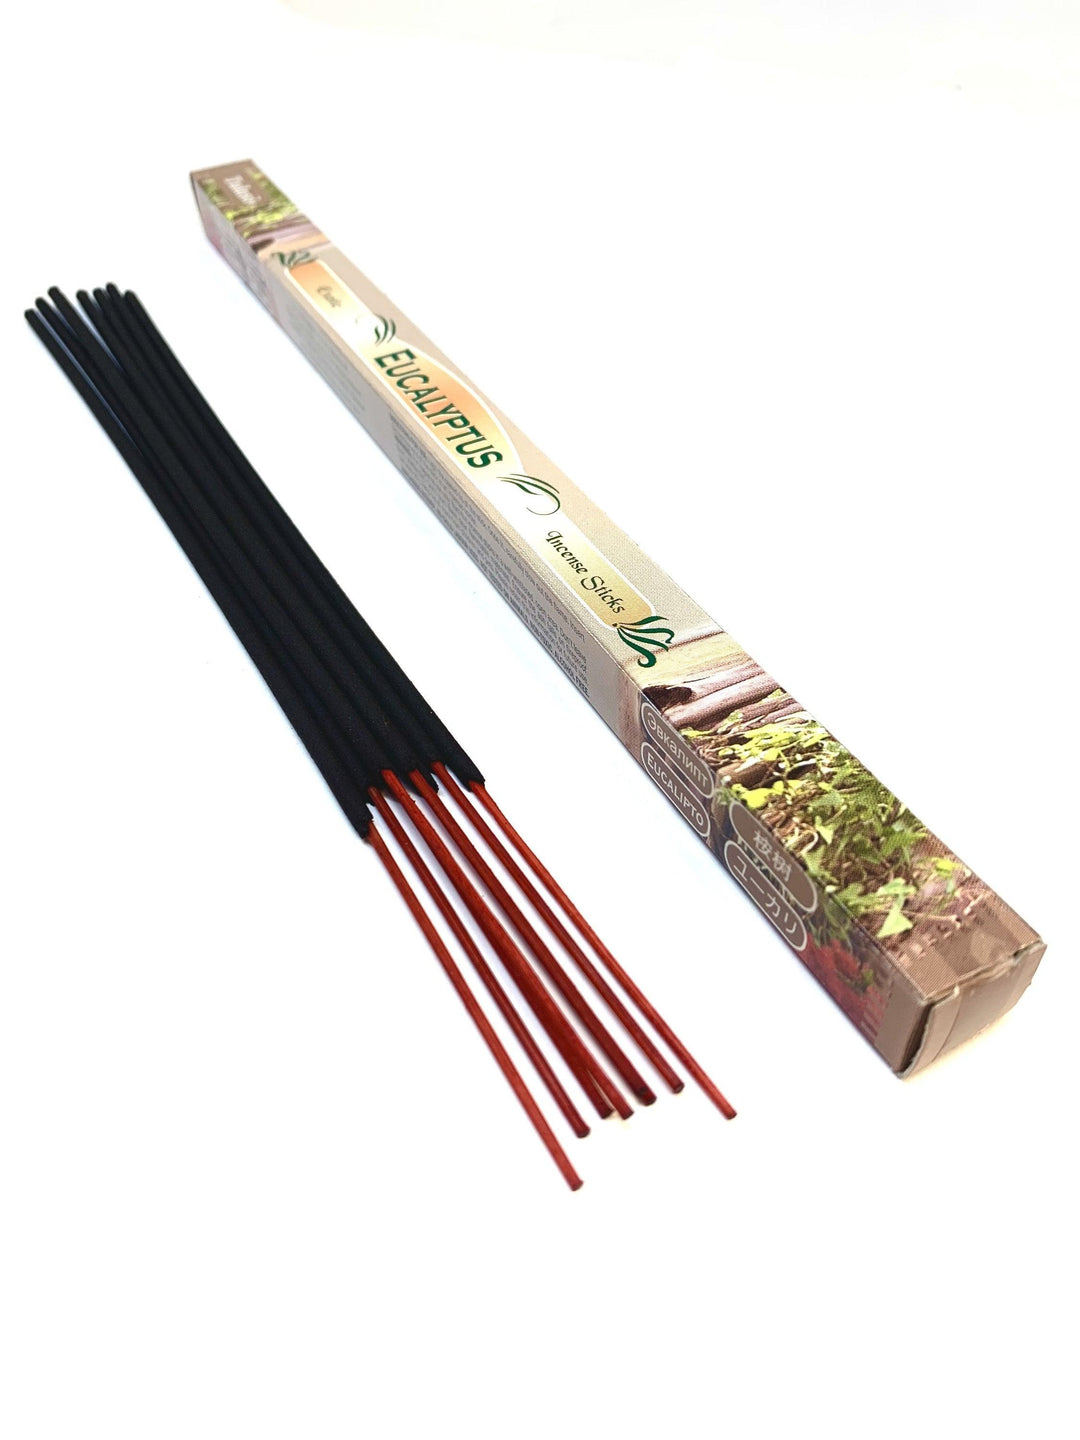 Eucalyptus Incense Sticks (Pack of 8 sticks) - Brand My Case